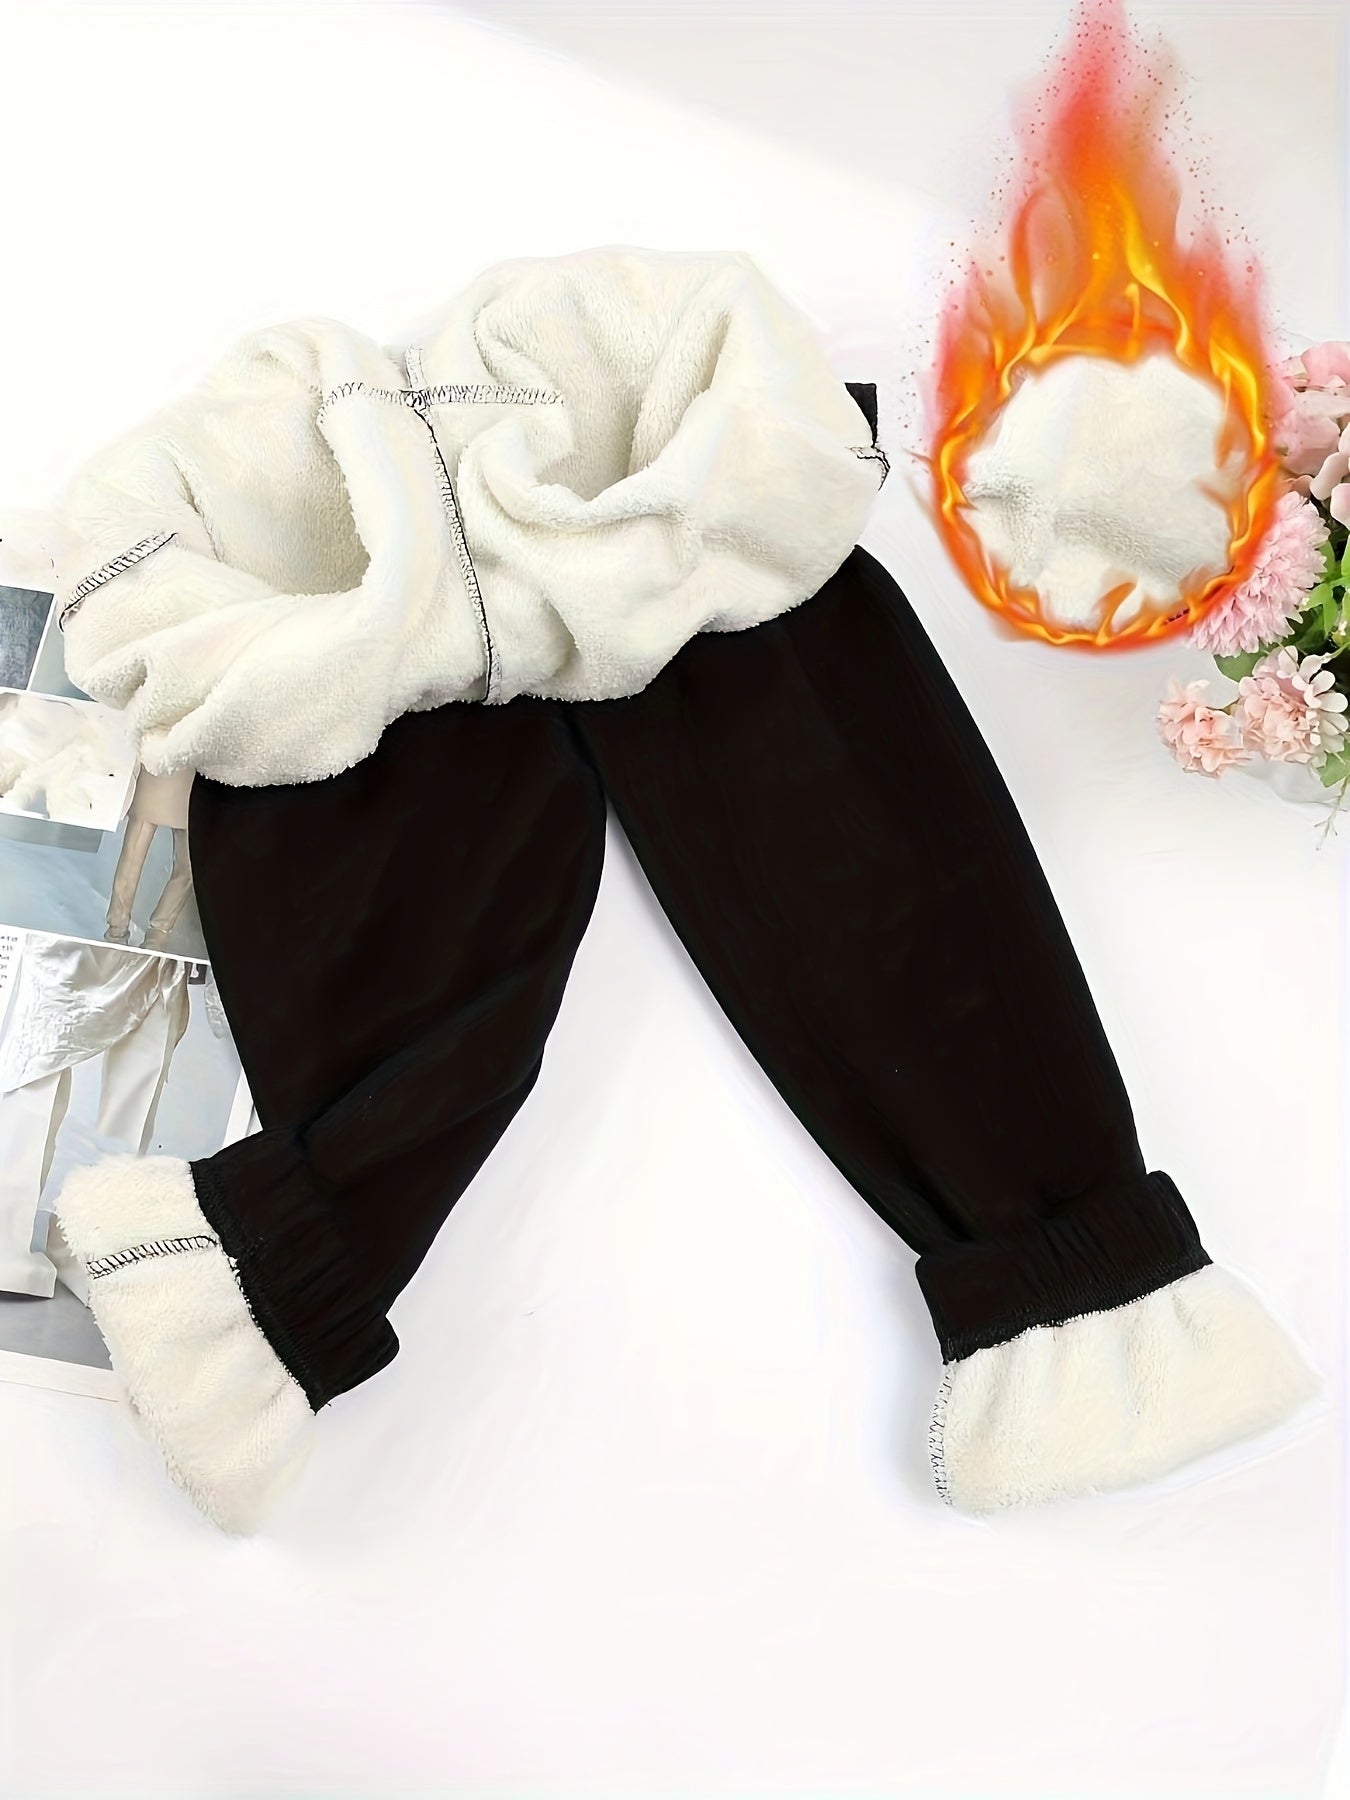 Vzyzv Fleece Thickened Sweatpants, Winter Warm Sports Running Pants, Women's Activewear